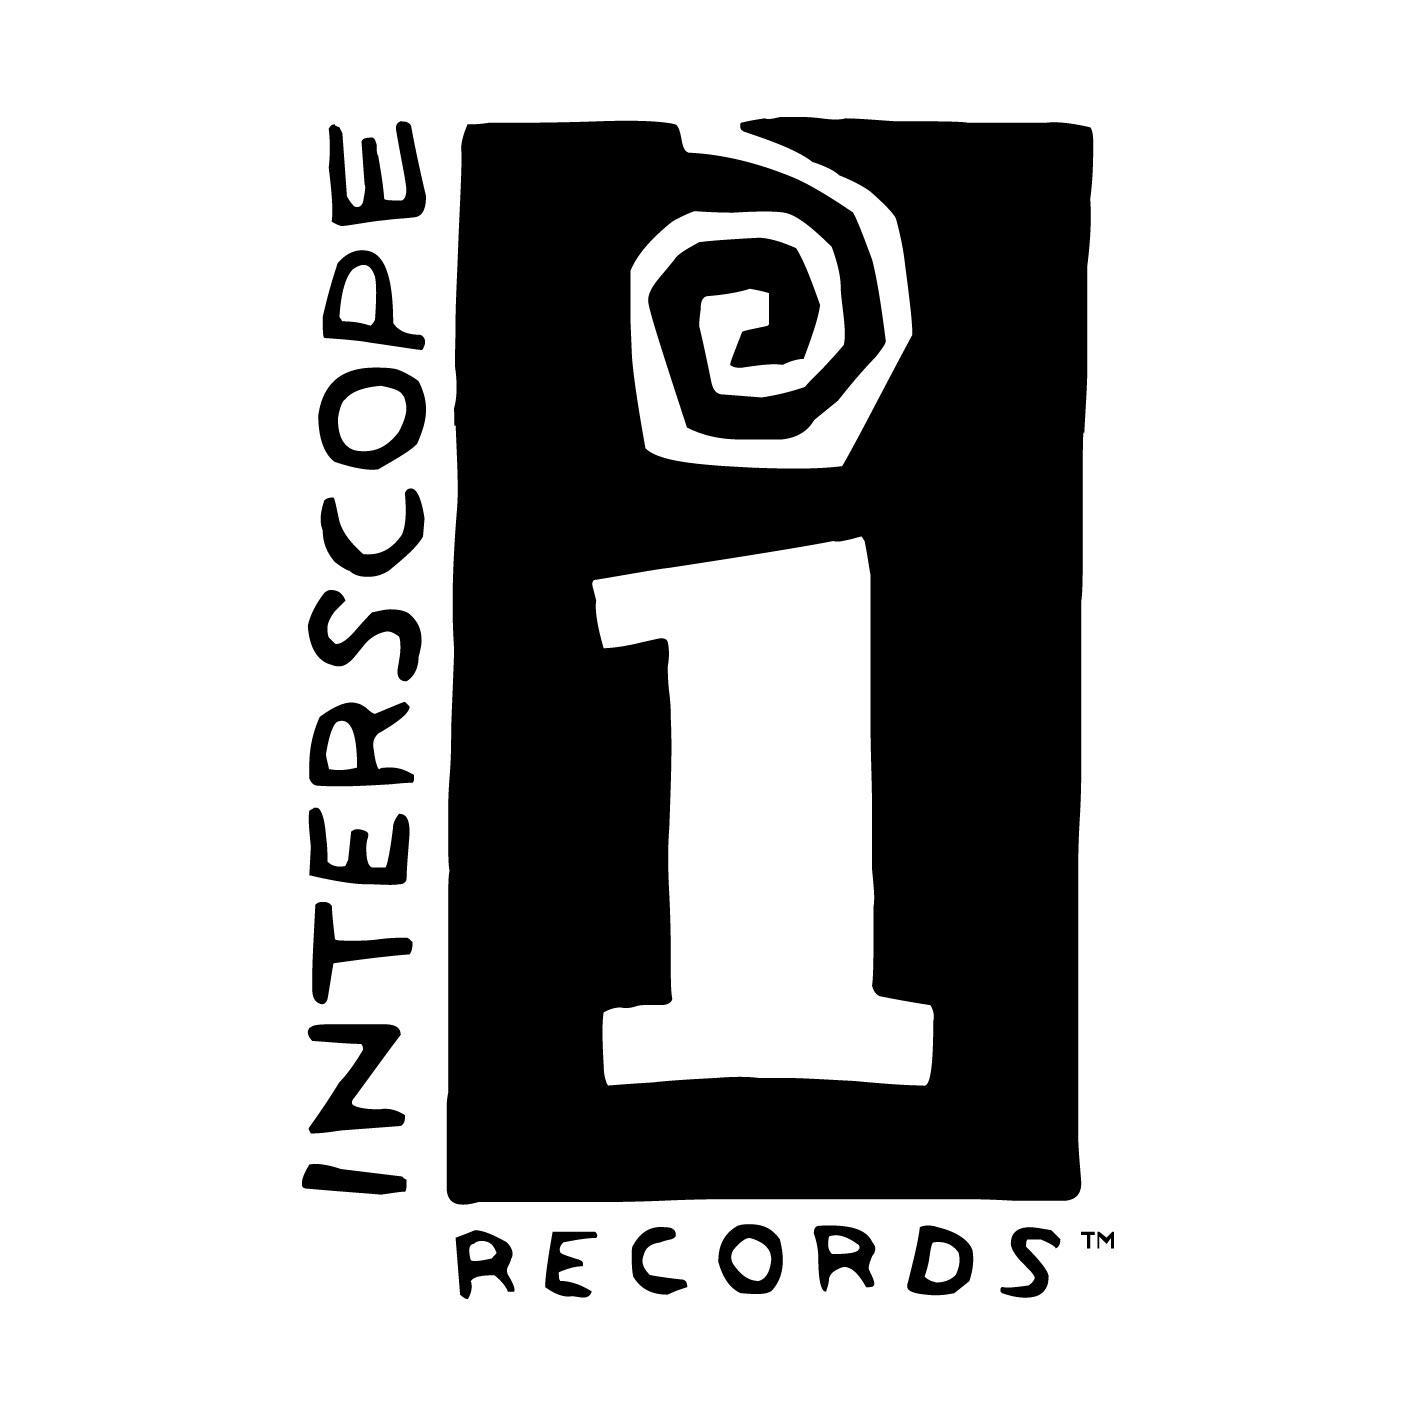 Records Logo - Interscope Records' logo!